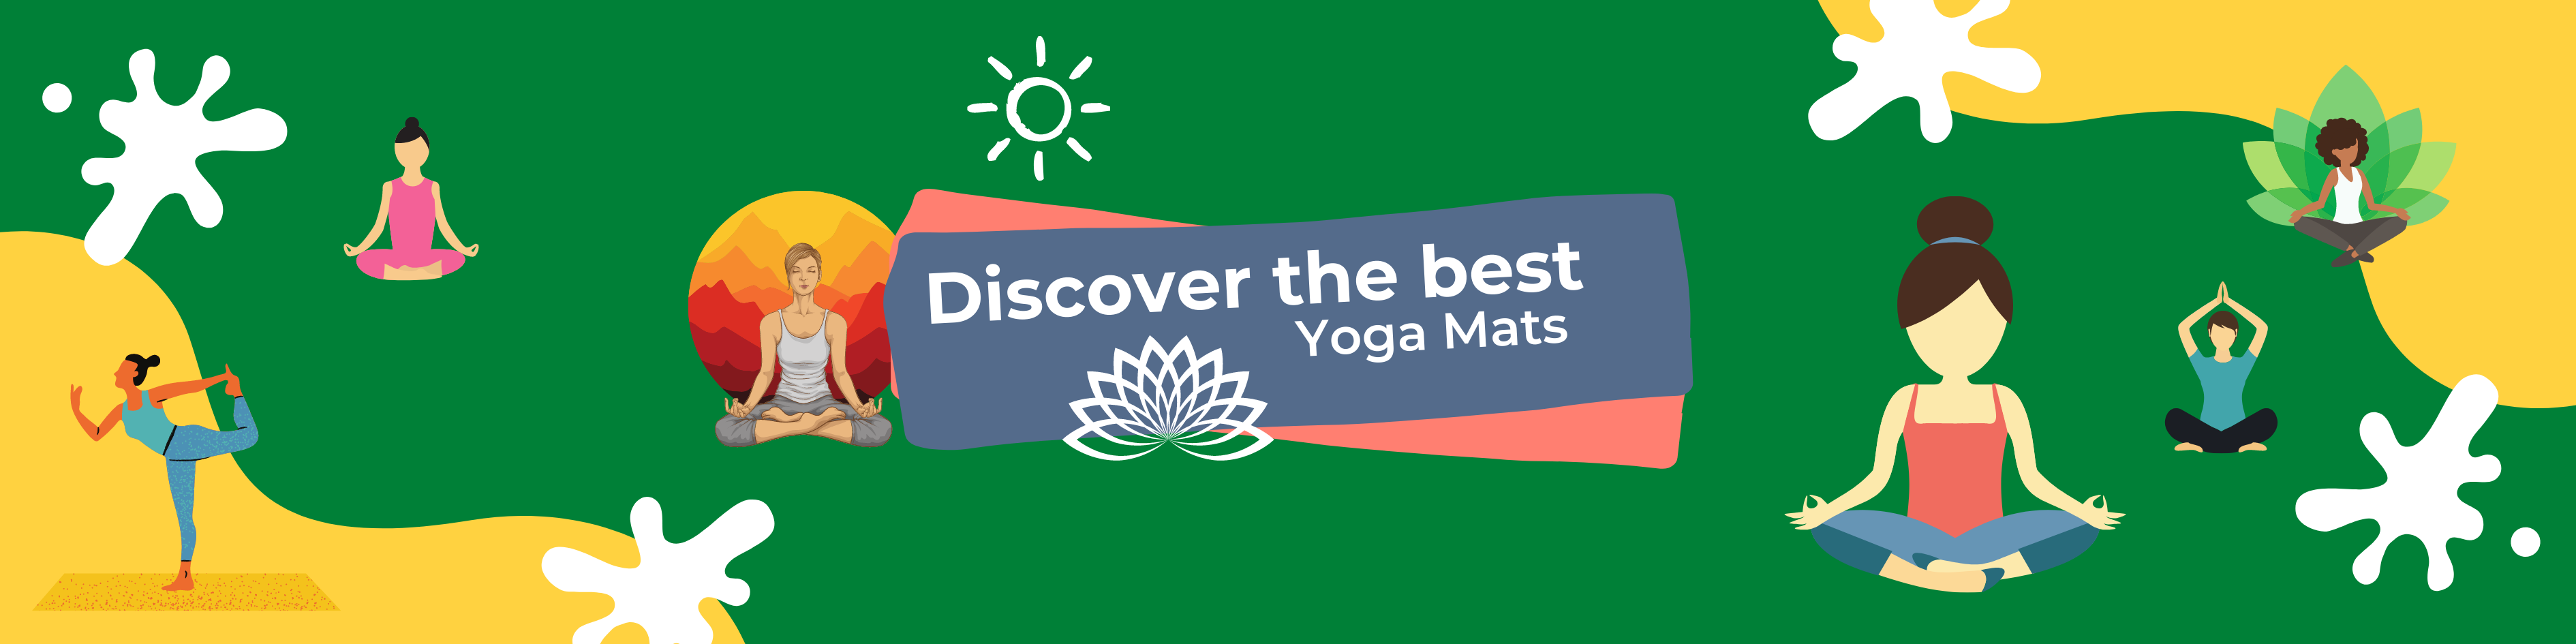 designer yoga mats collection 